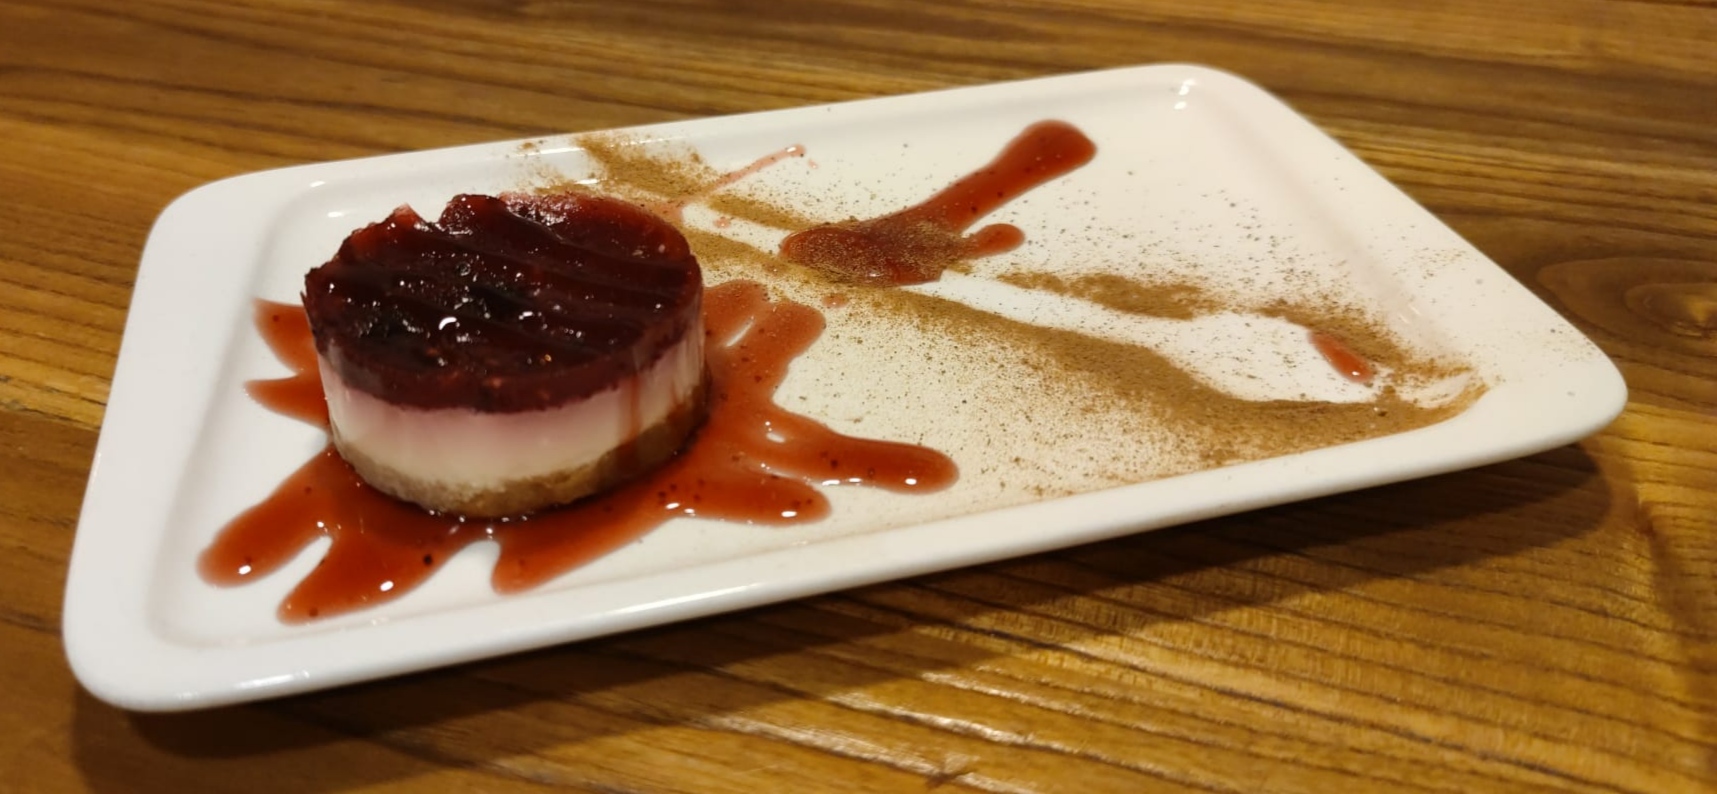 Cheesecake with strawberry jam